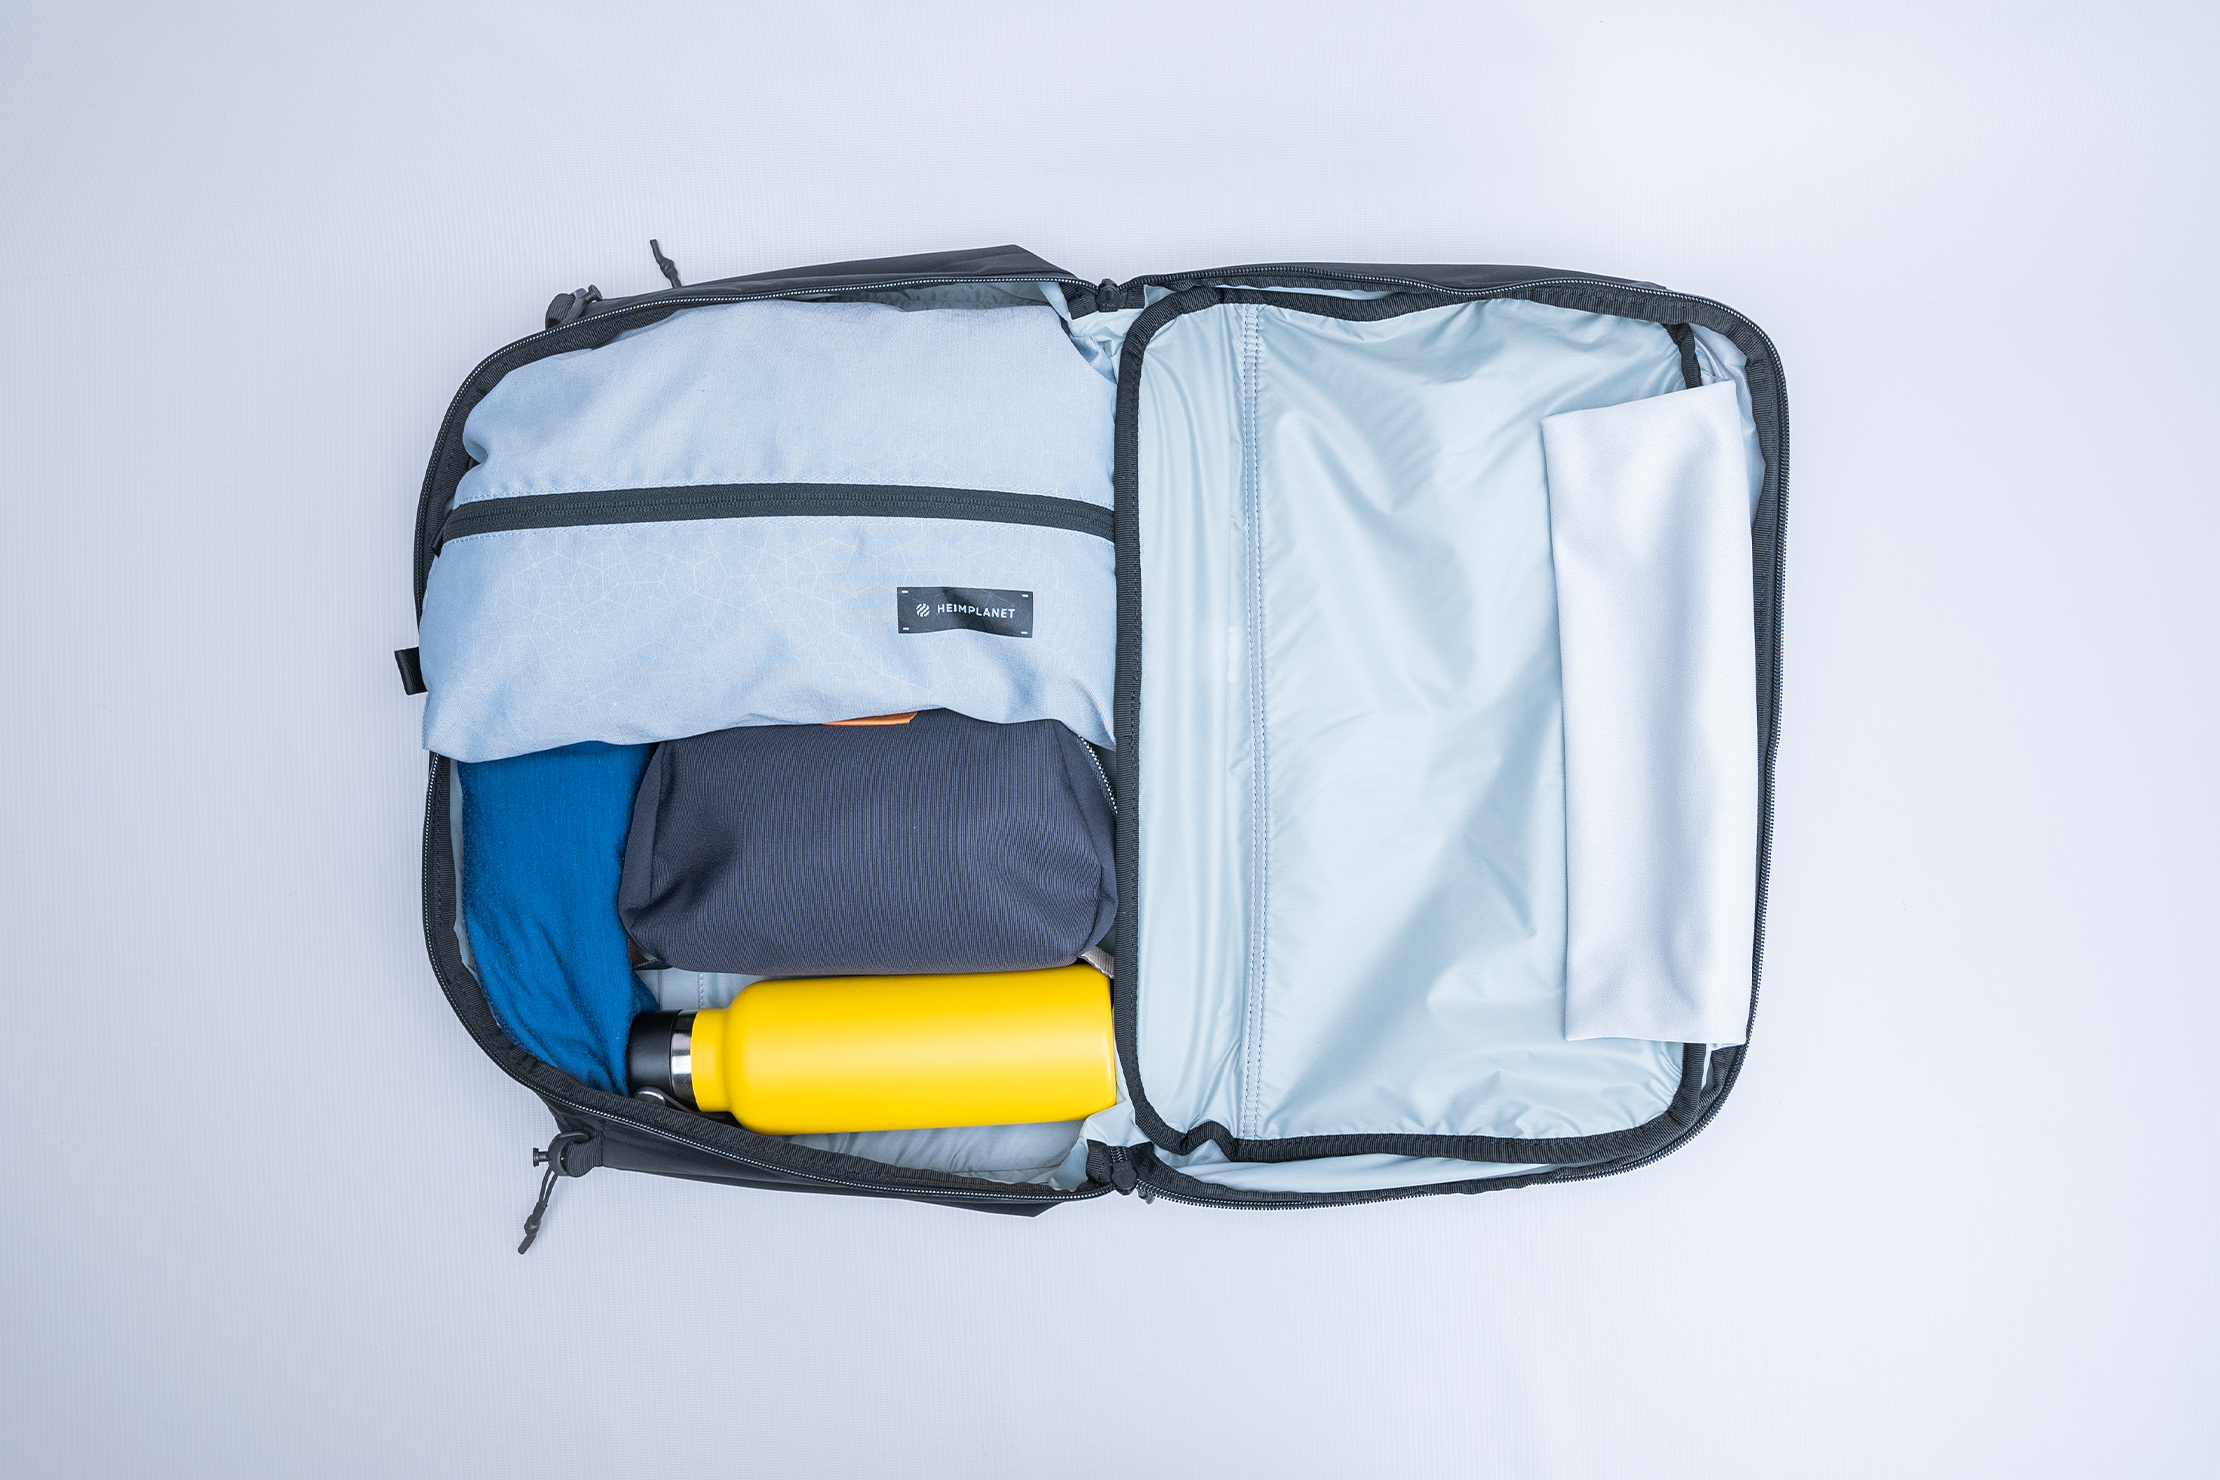 Osprey Ozone Carry-On Boarding Bag Stuffed